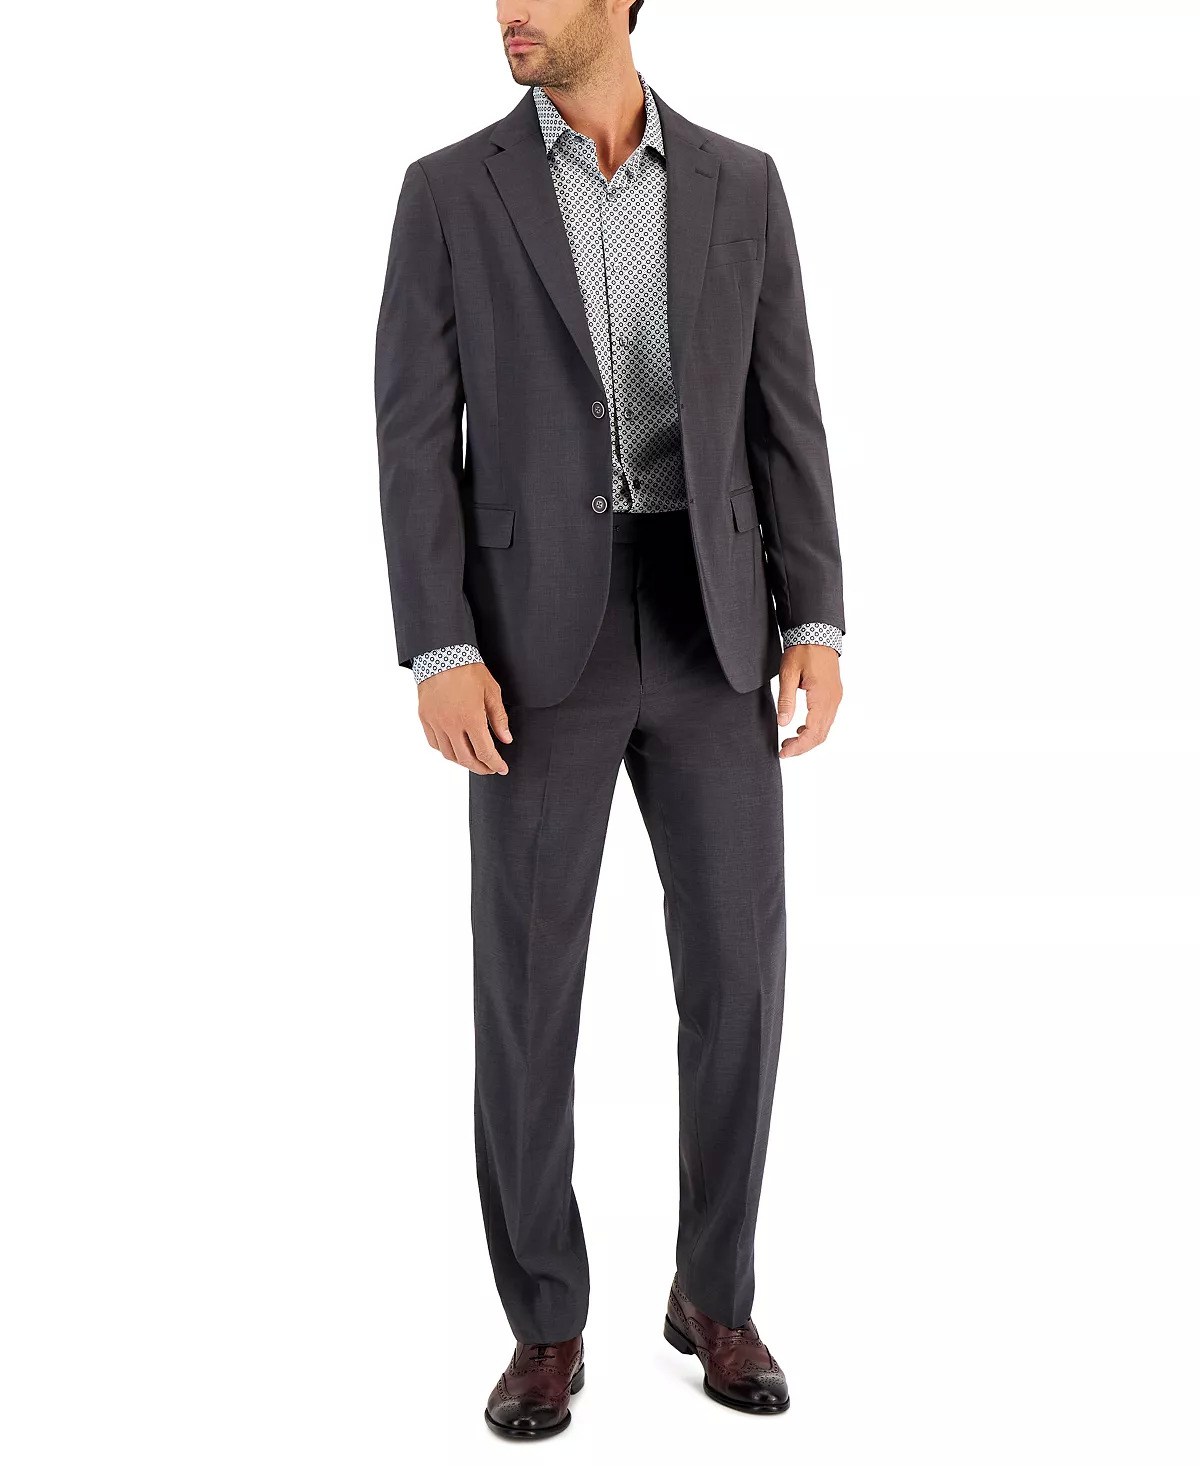 2-Piece Nautica Men's Modern-Fit Stretch Suit (Light Grey) $79 + Free Shipping